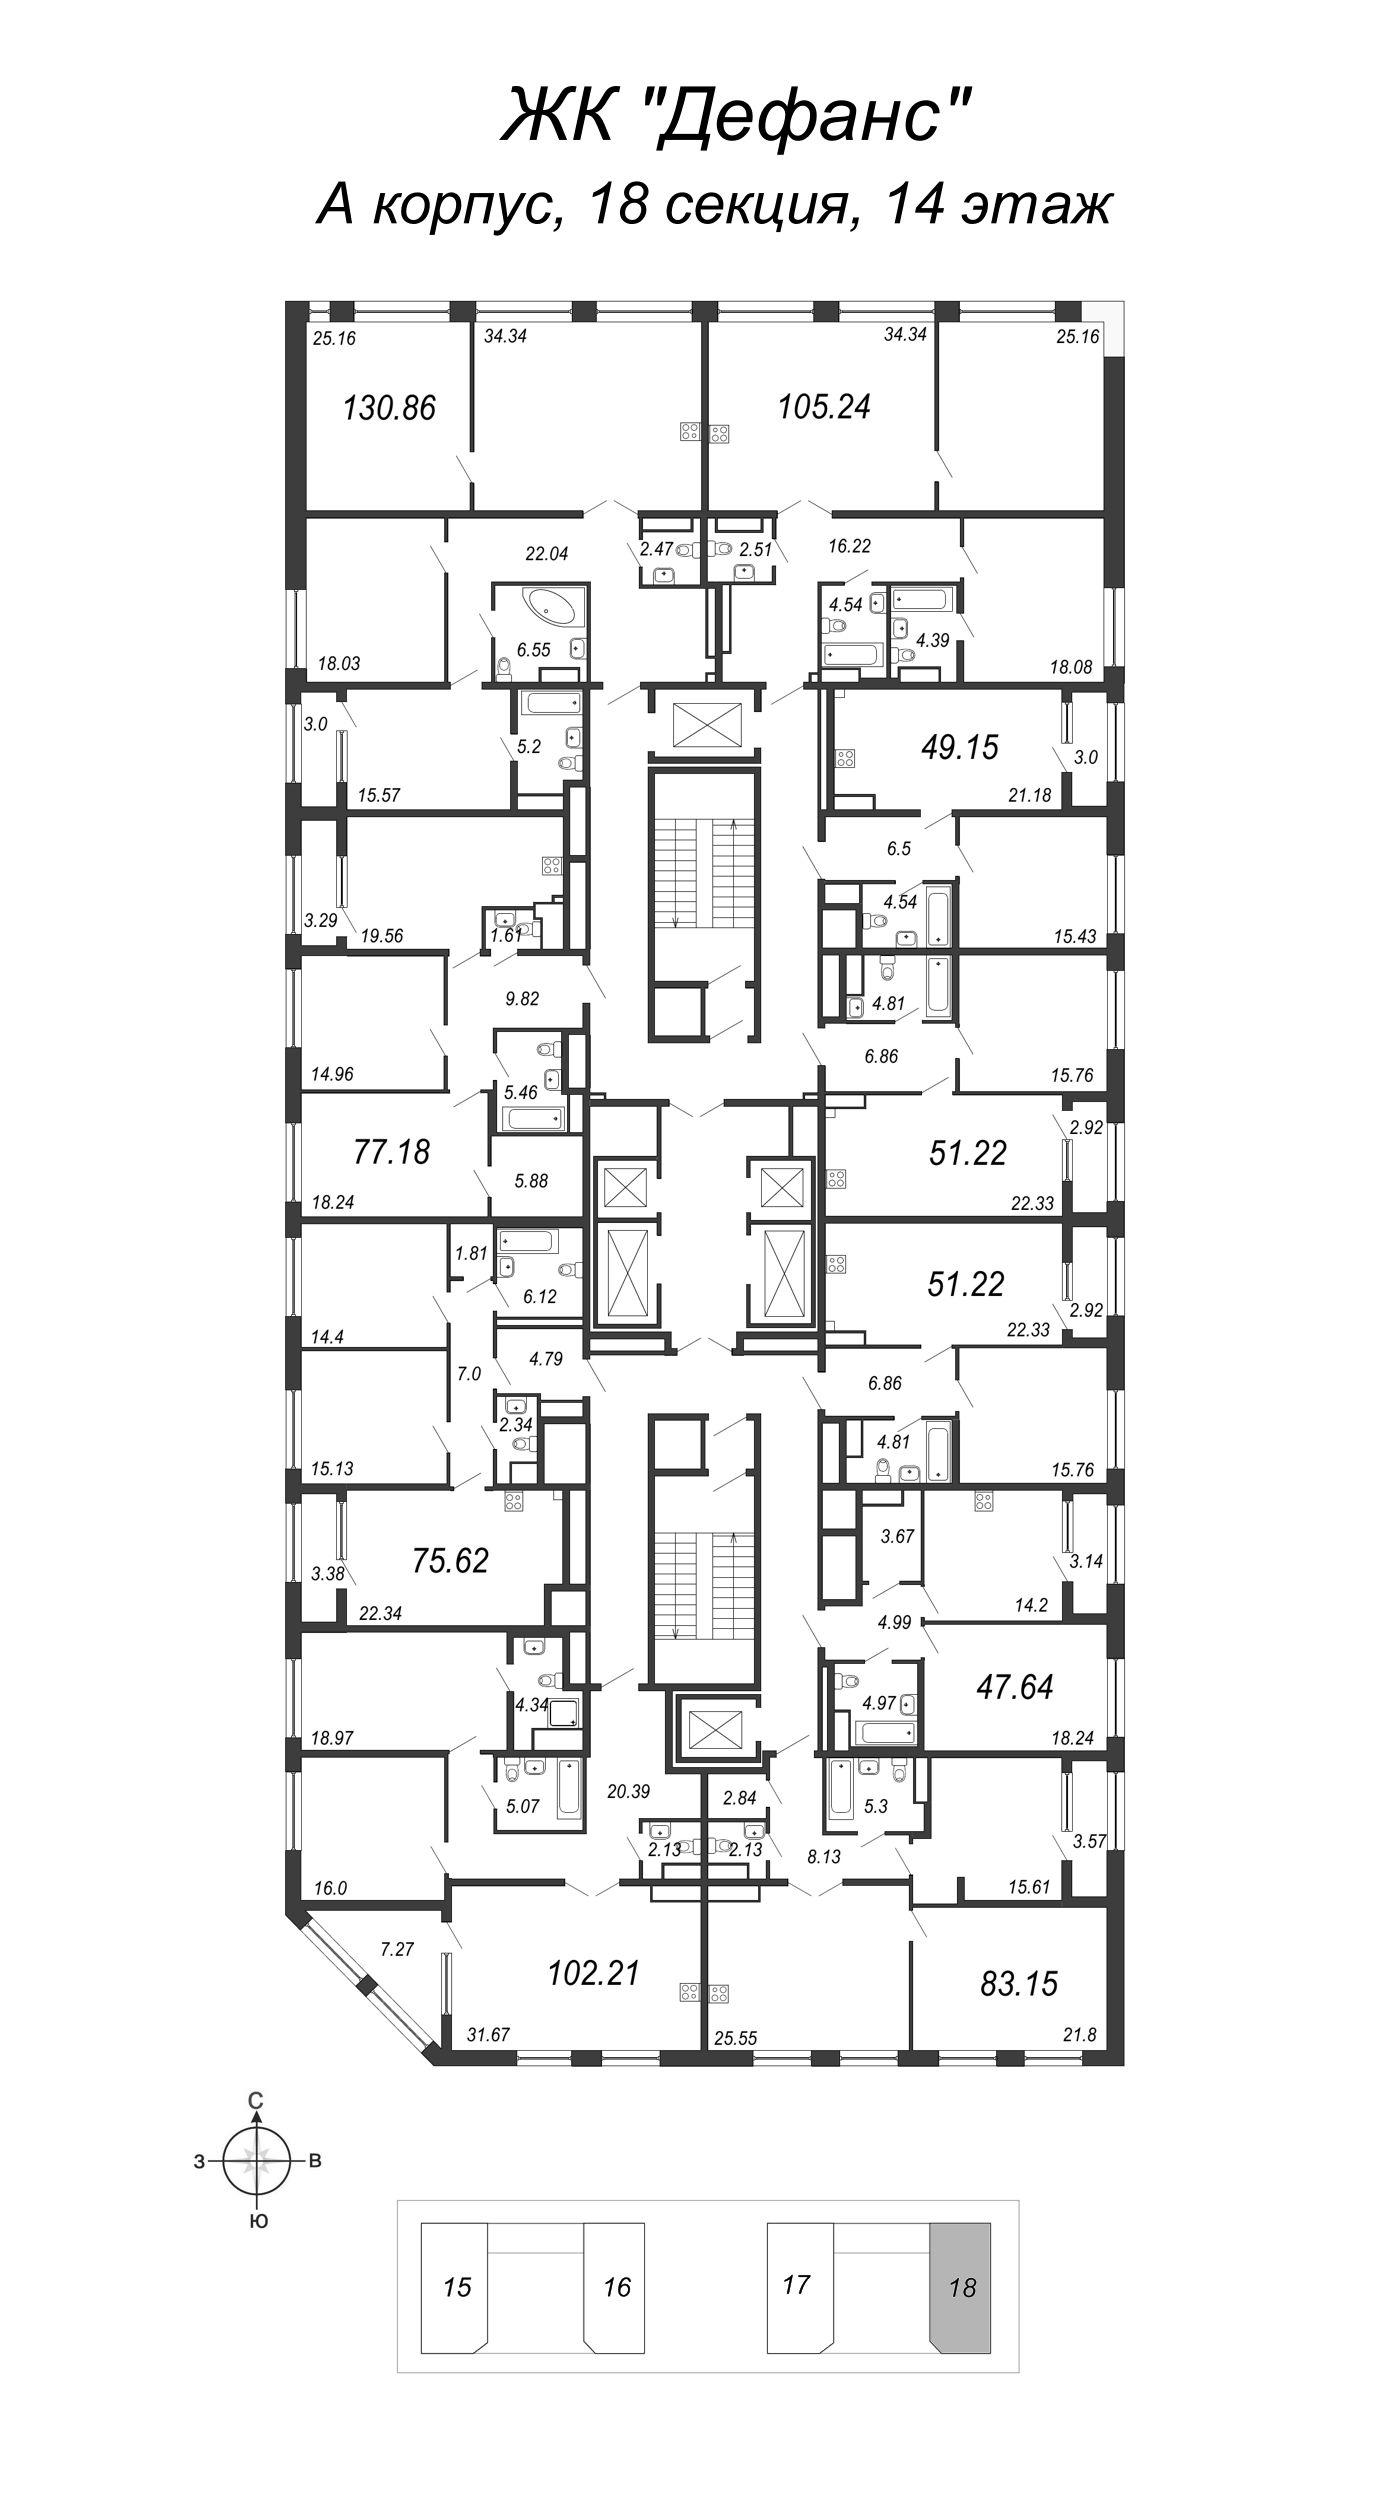 4-комнатная (Евро) квартира, 130.86 м² - планировка этажа